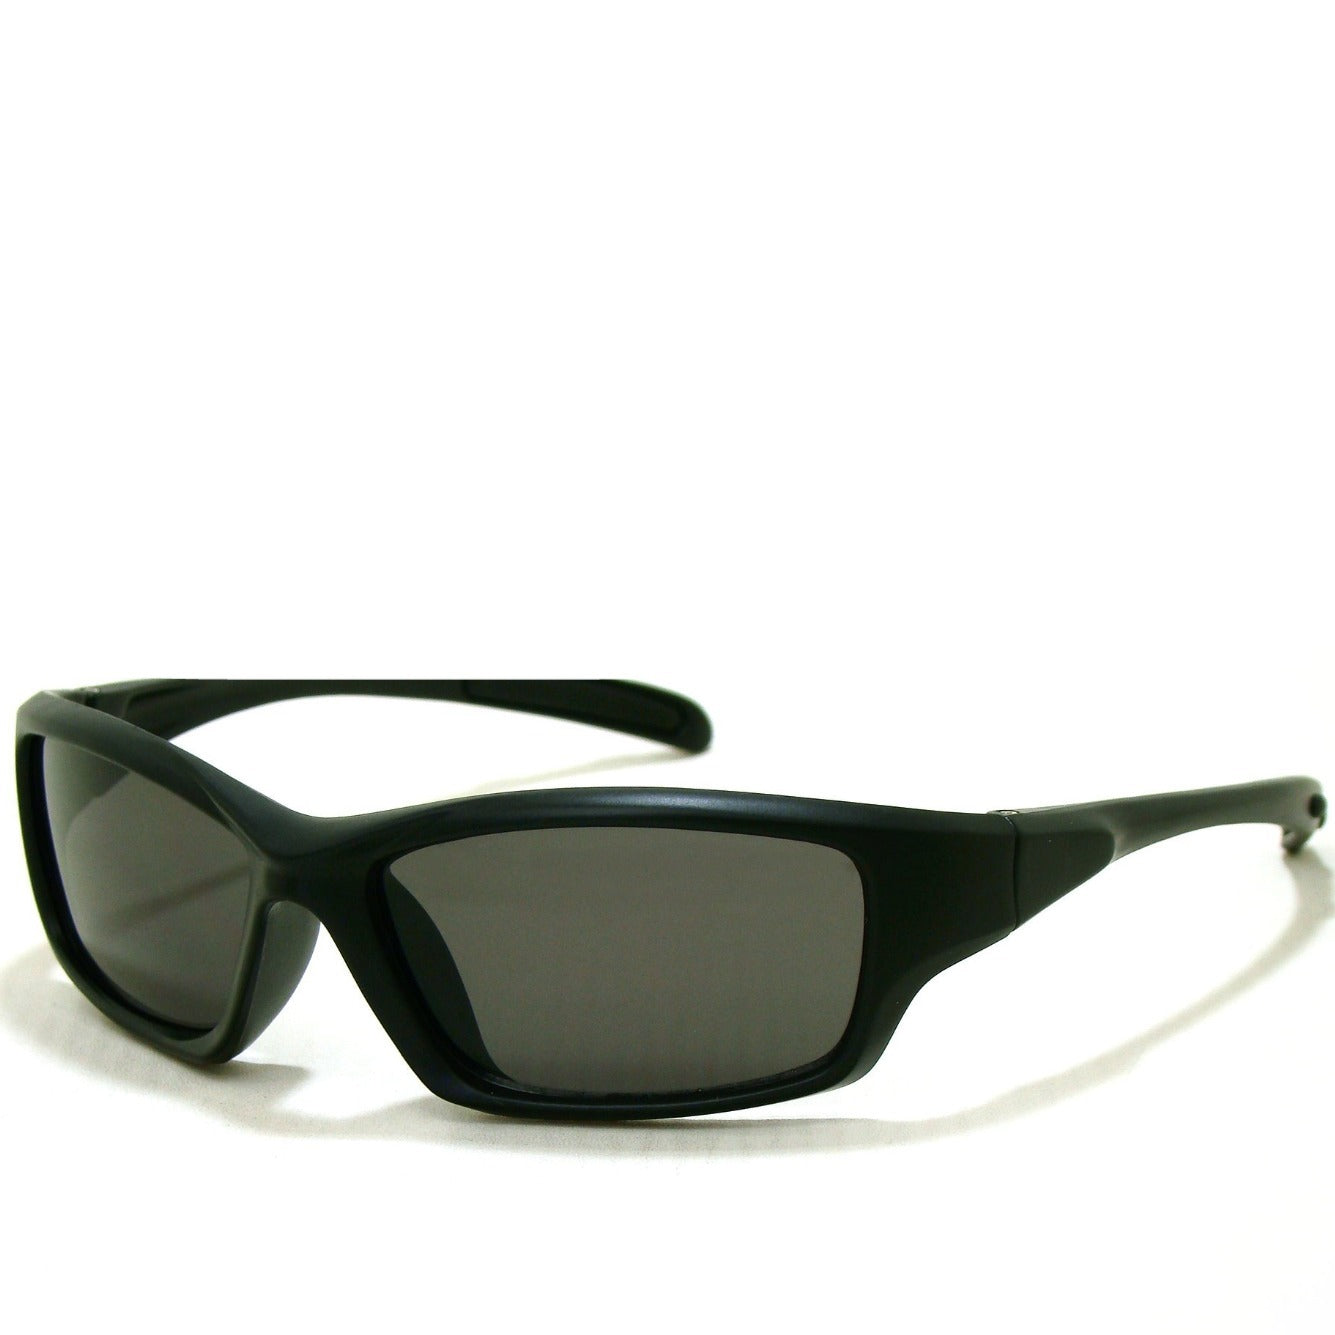 Playette Dean Trend Boys Sunglasses - Black